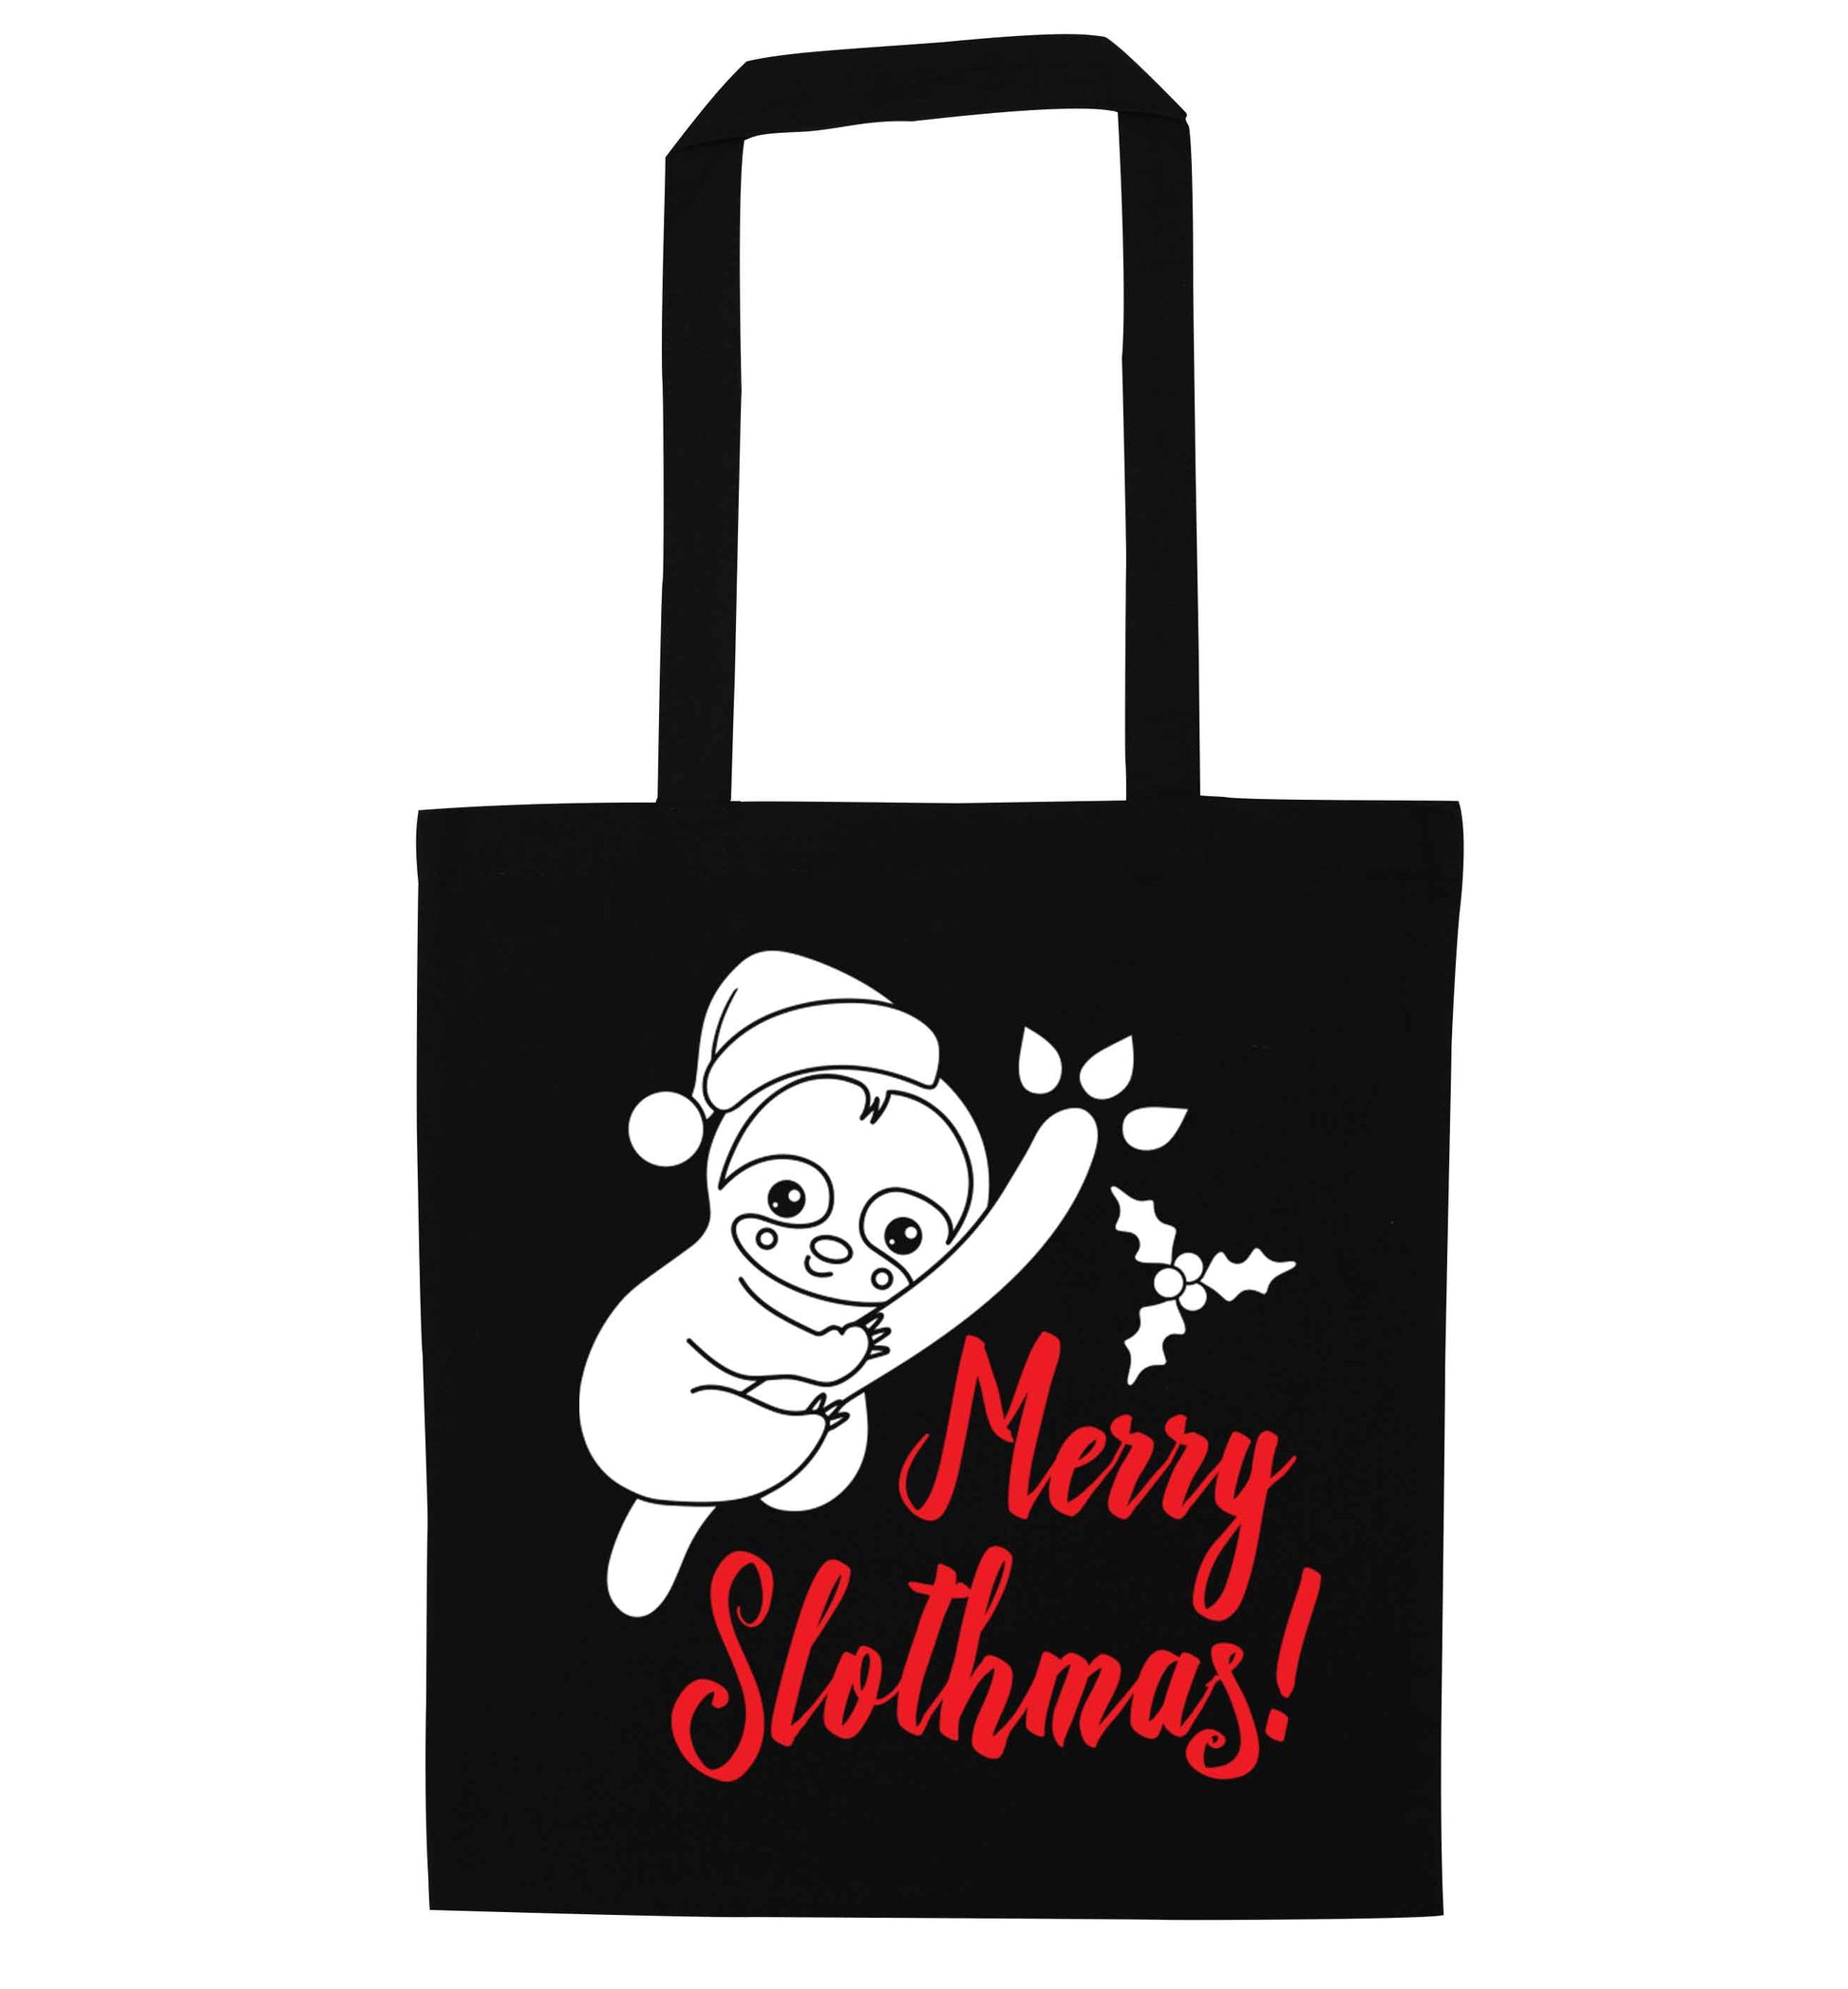 Merry Slothmas black tote bag